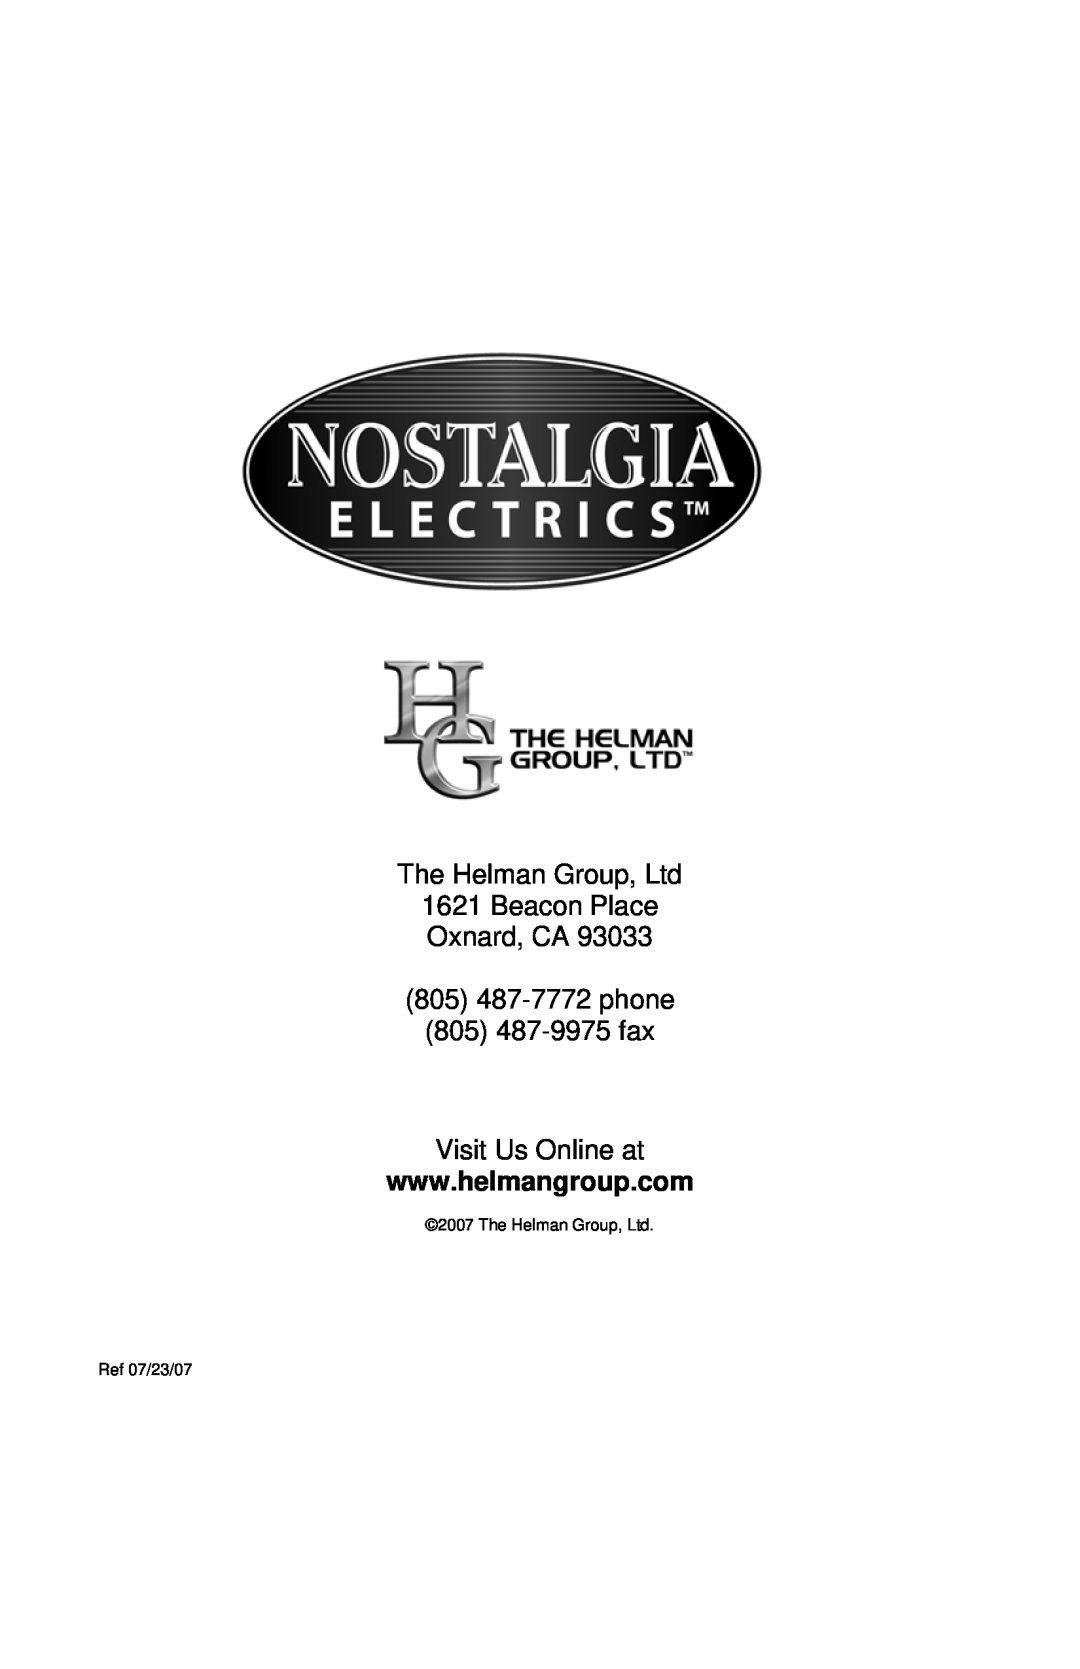 Nostalgia Electrics LPF-210 manual Oxnard, CA 805 487-7772phone 805 487-9975fax, Visit Us Online at 